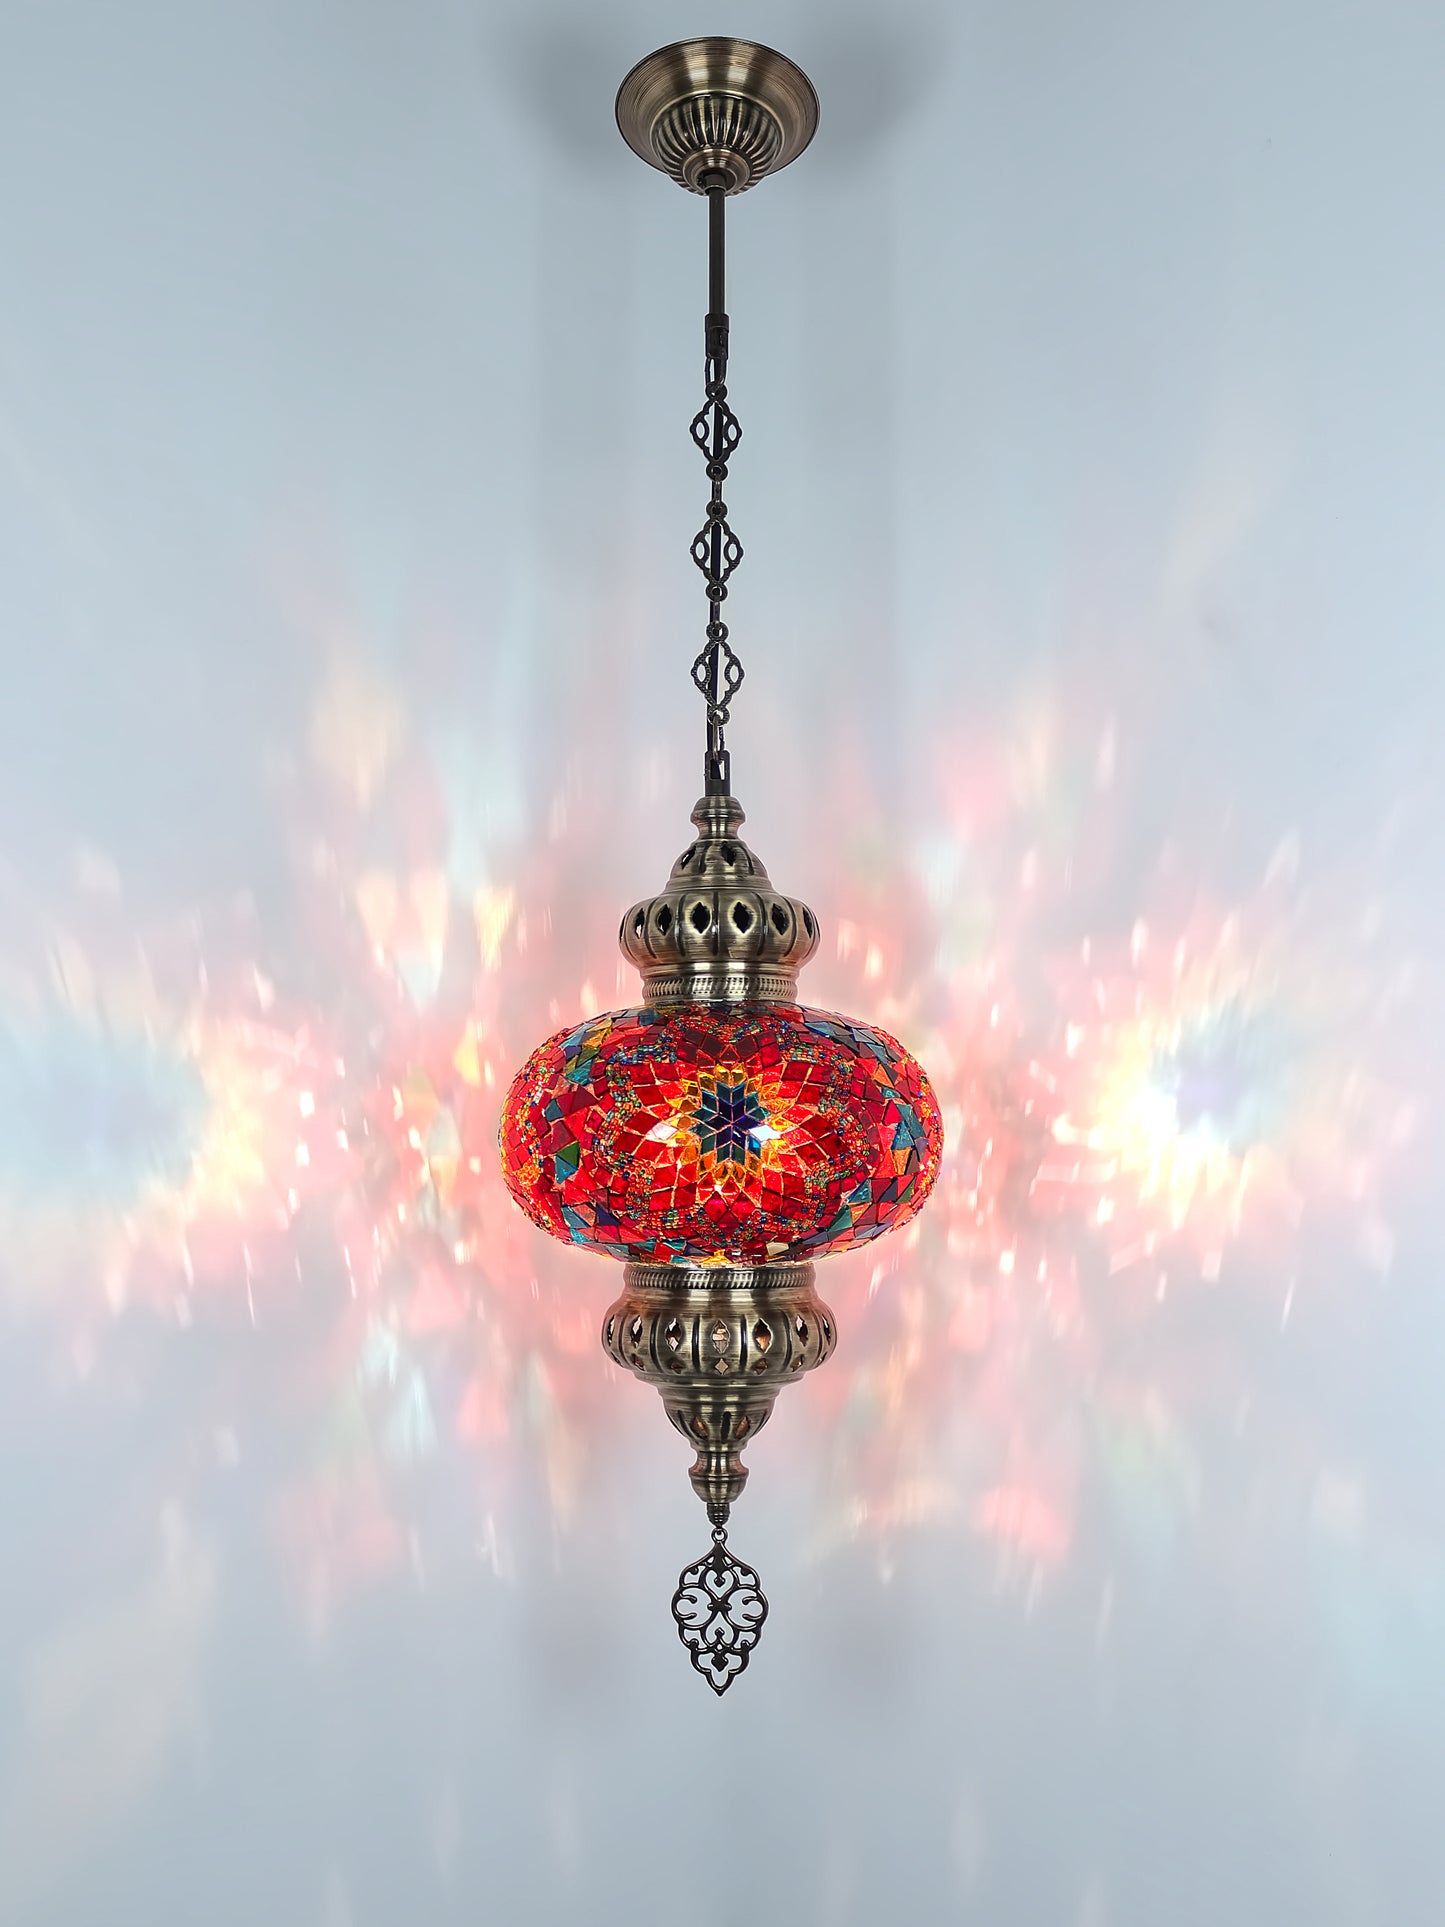 Turkish Mosaic Pendant Lighting 9,84 Inch Diameter